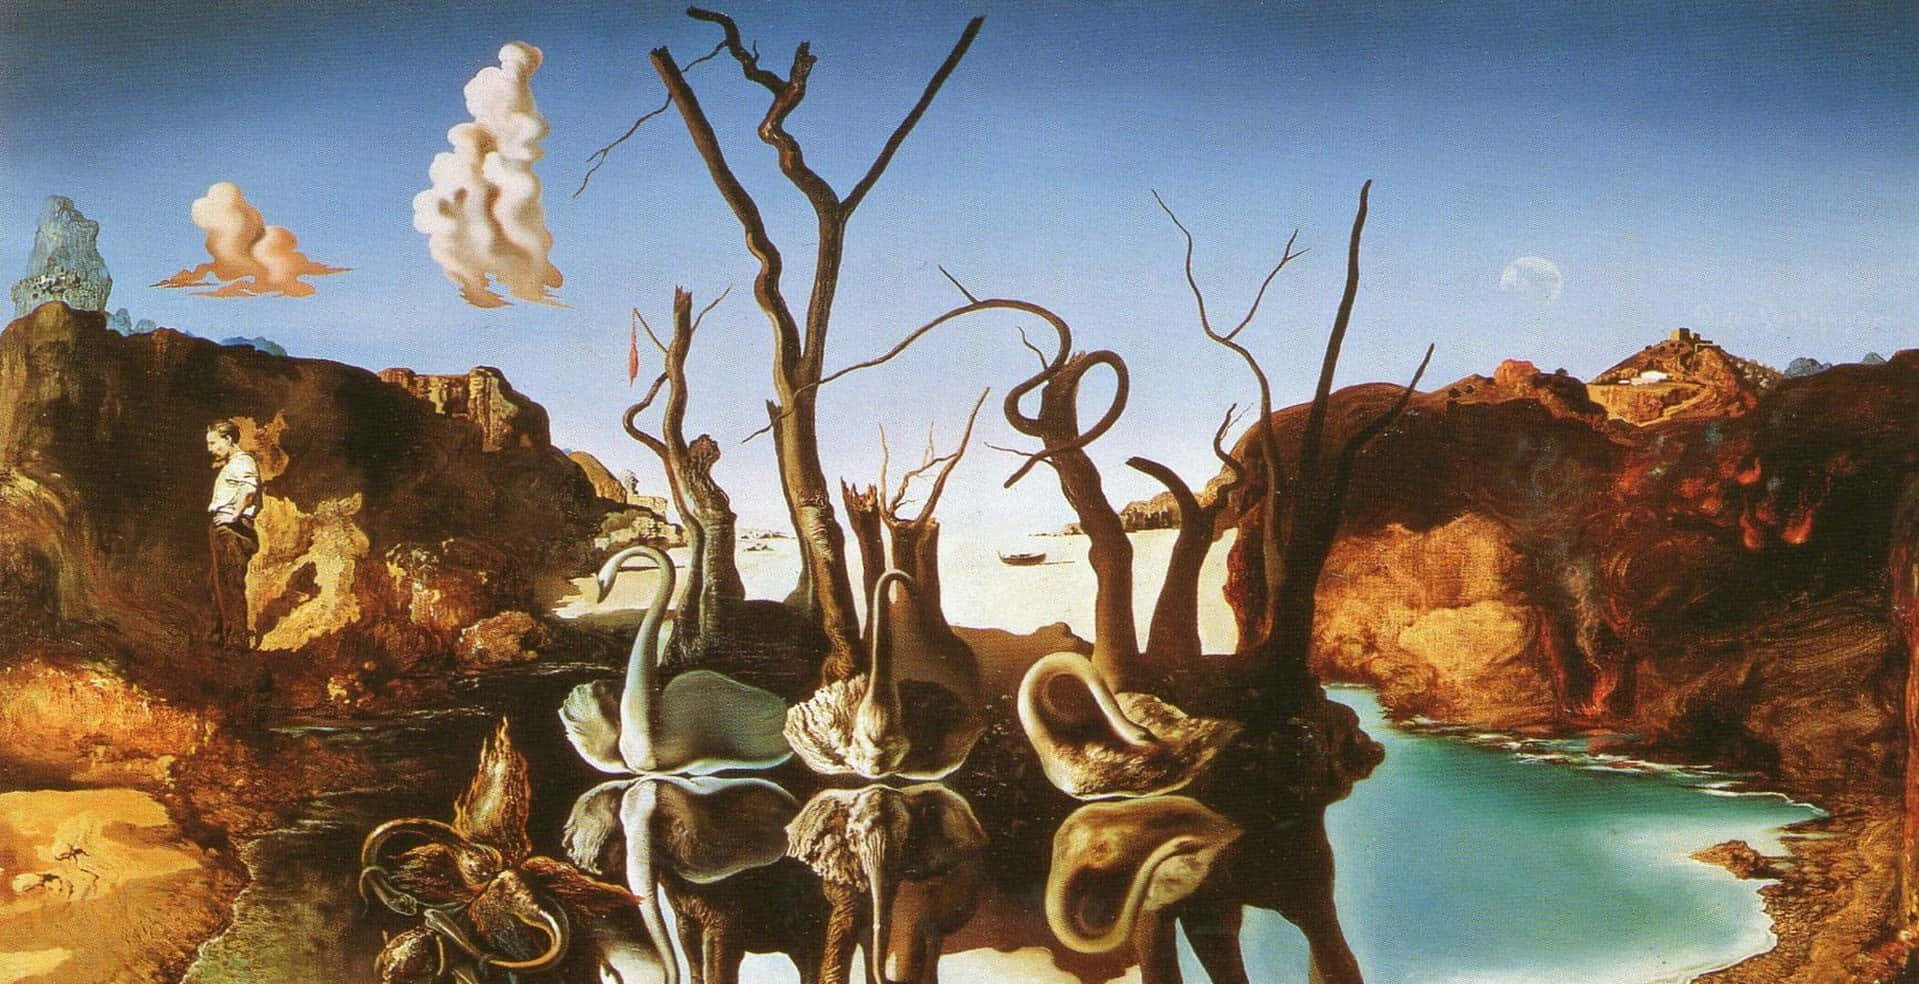 Surrealescenario Onirico Dipinto A Mano Da Salvador Dalí Sfondo